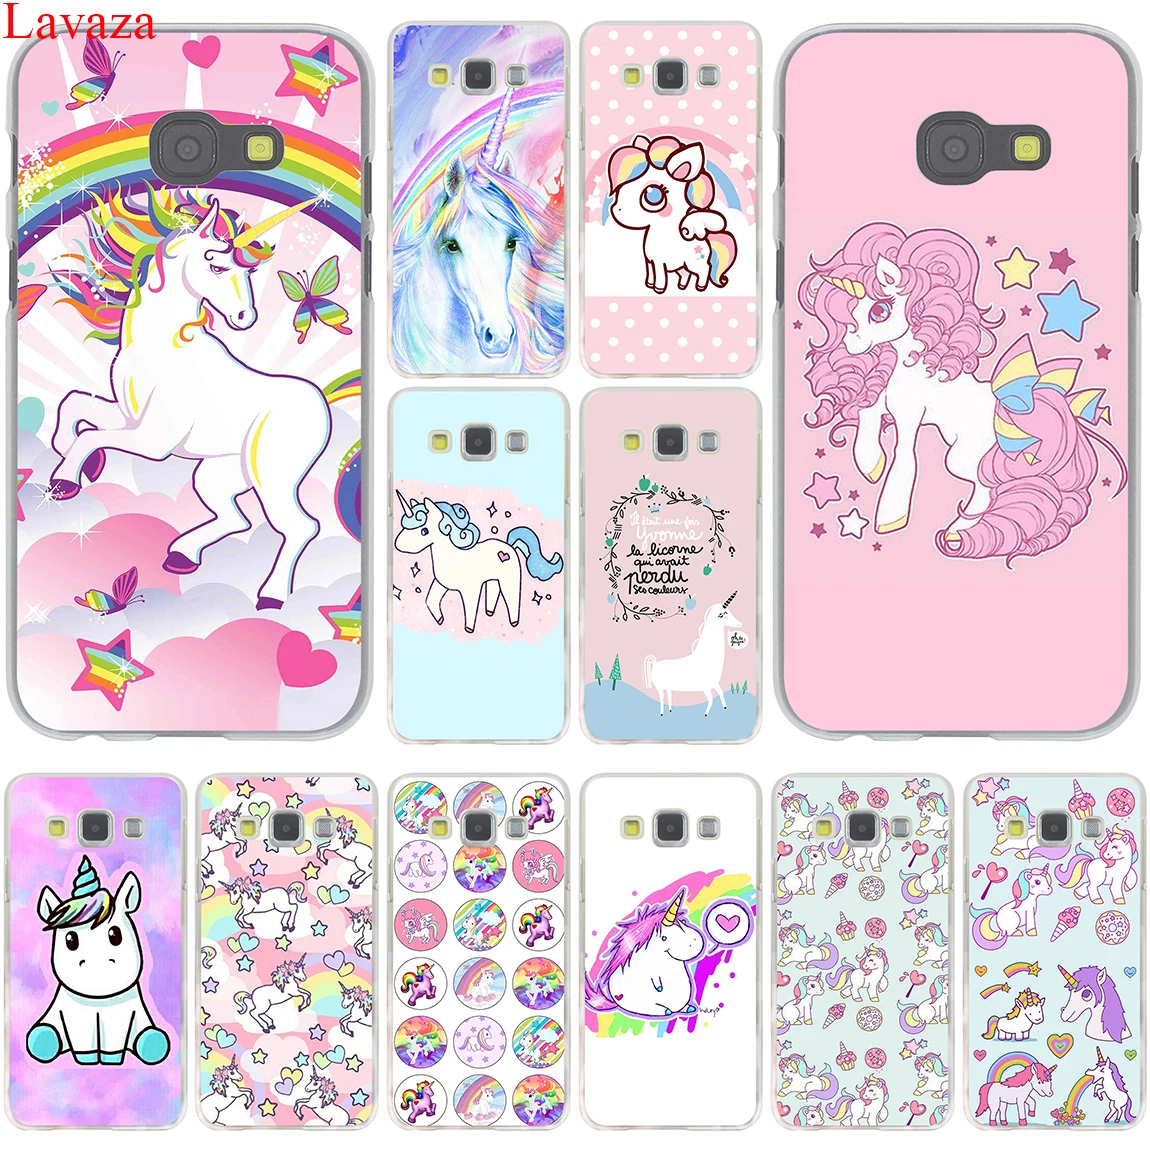 Lavaza Rainbow Lovely Unicorn Hard Case Cover for Samsung